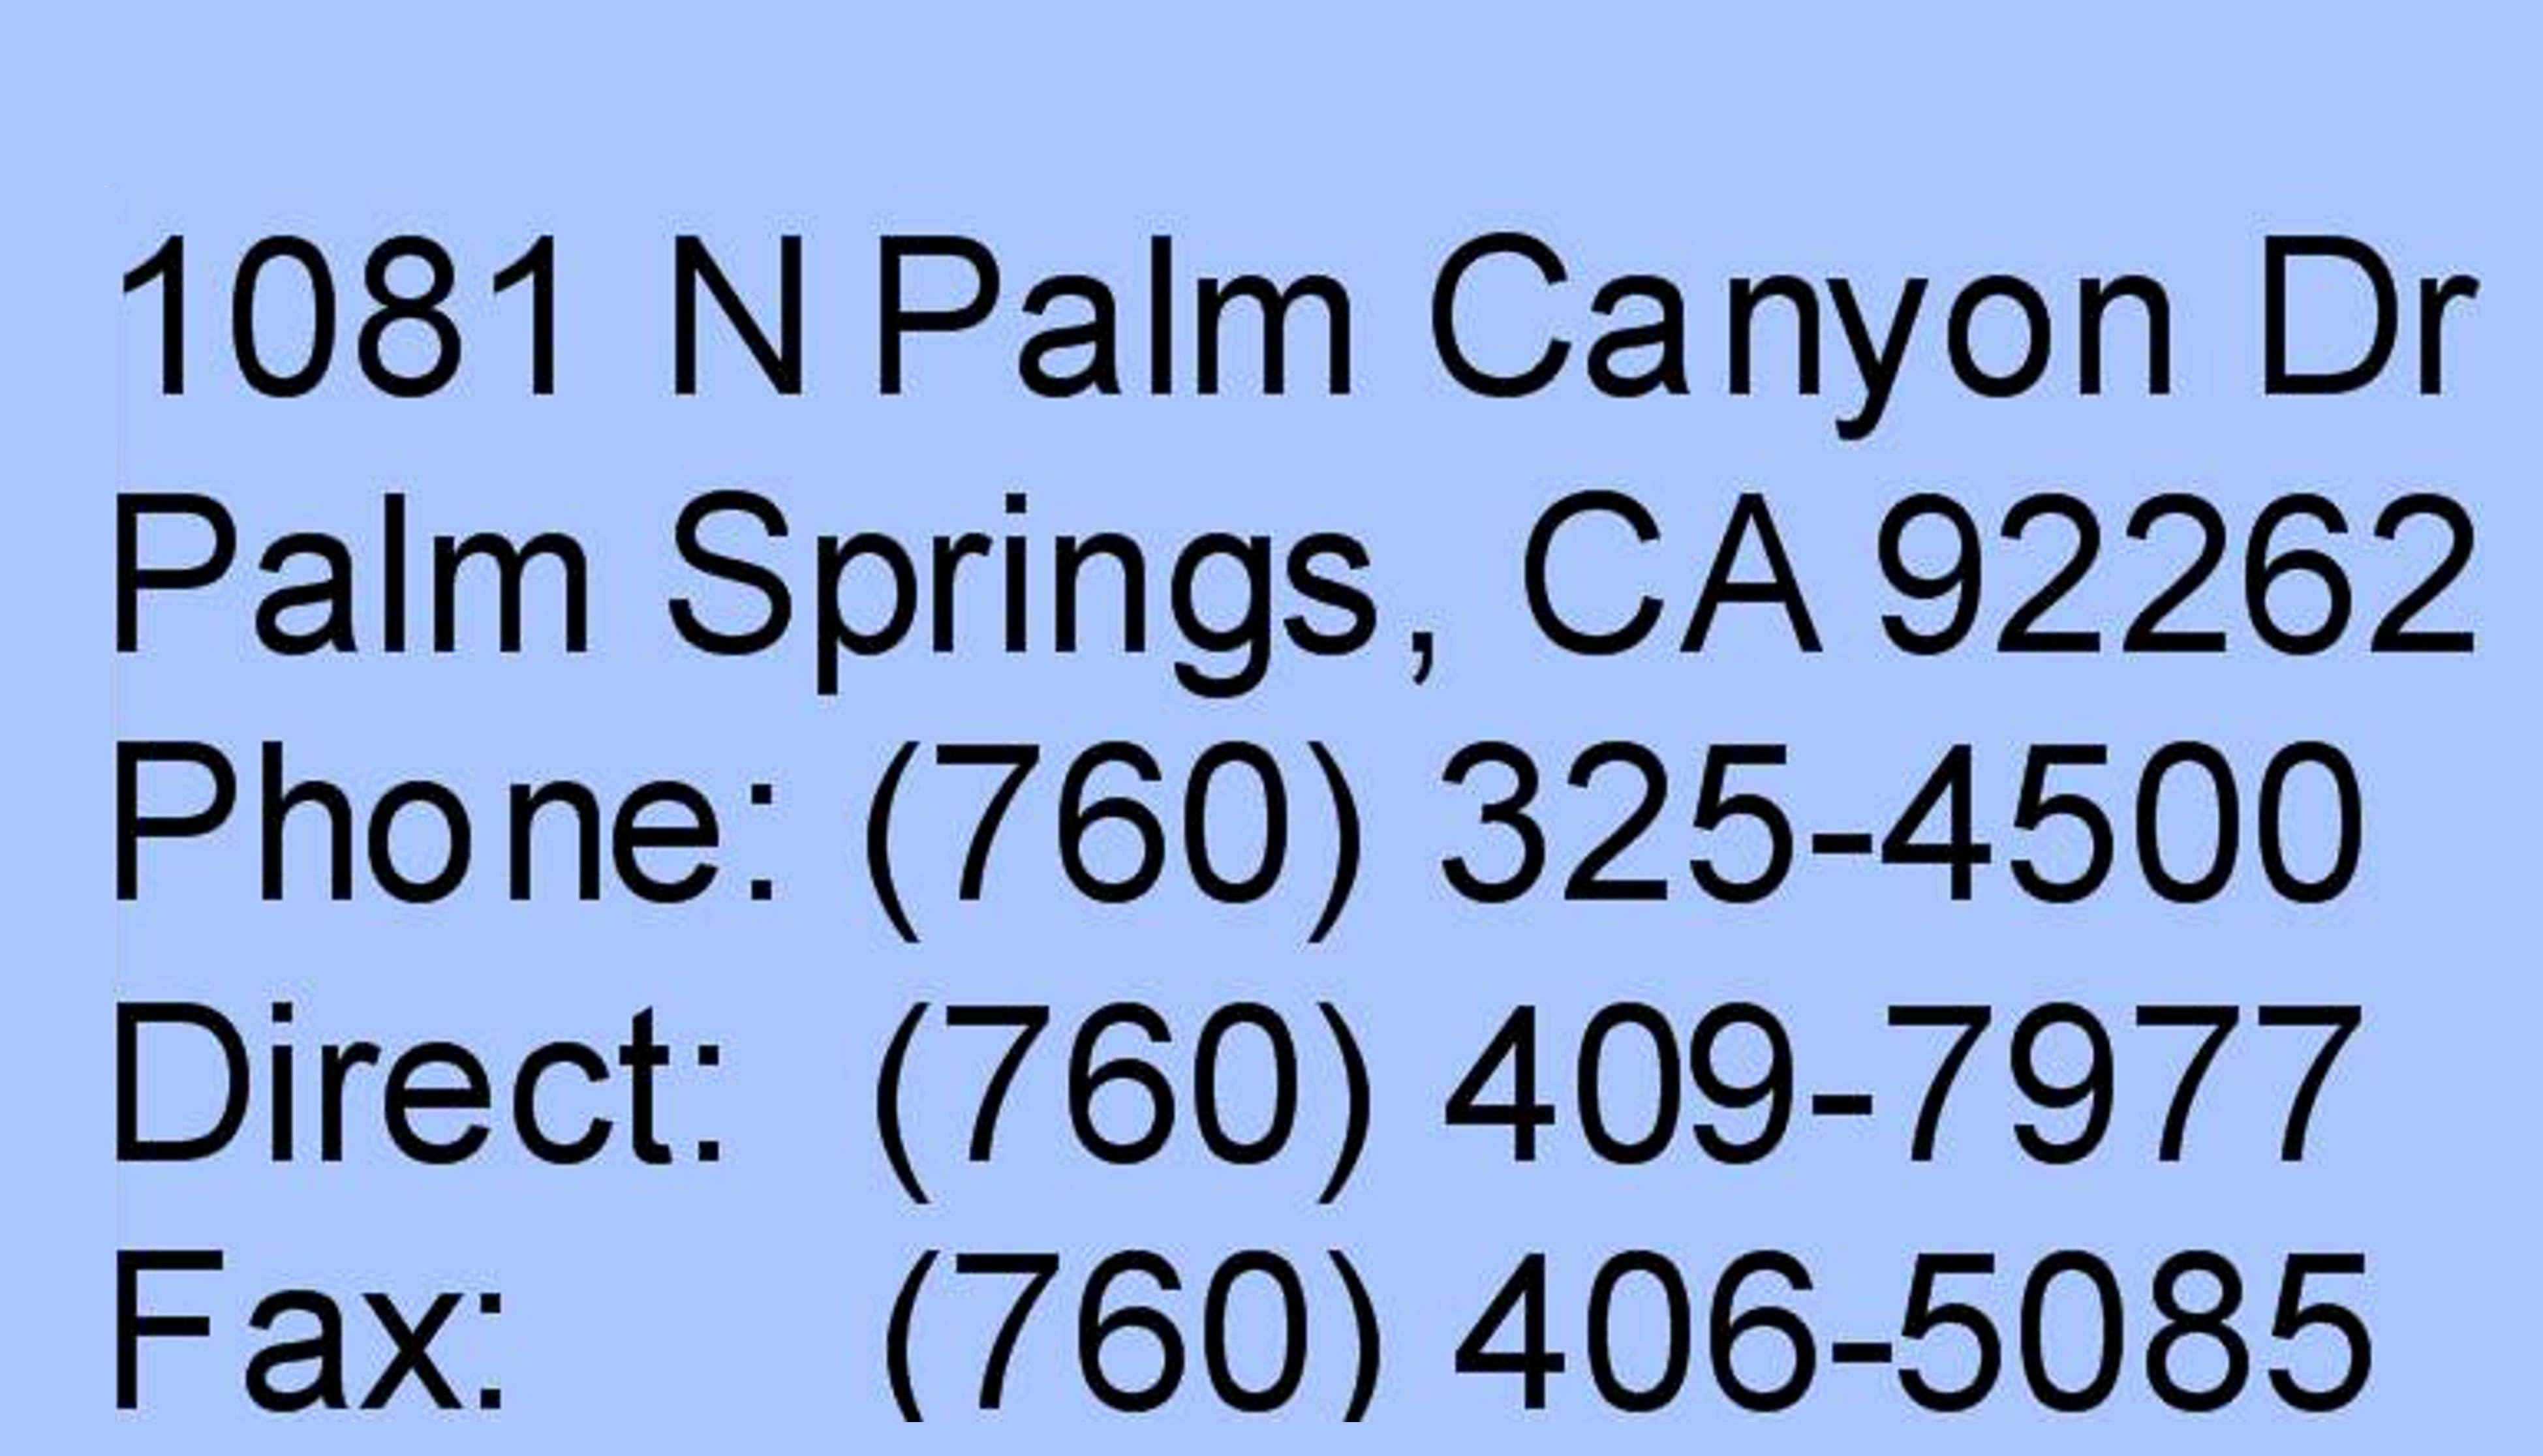 1081 N Palm Canyon Dr - Palm Springs, Ca 92262 - Phone (760) 409-7977